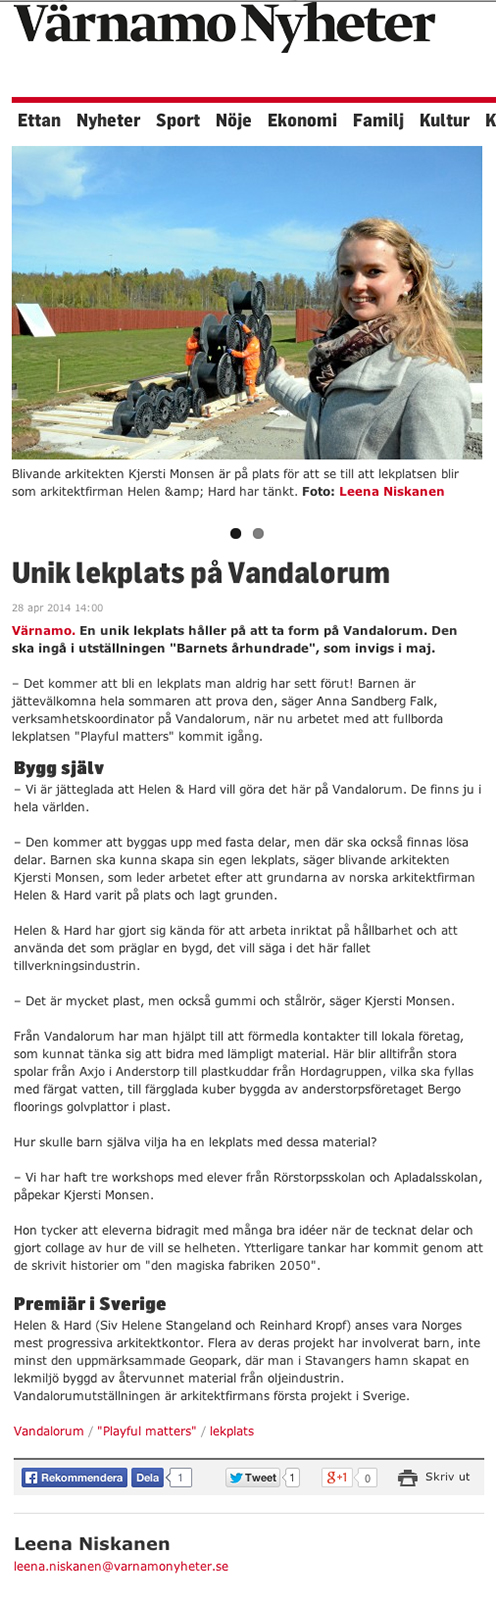 20140623 Unik lekplats på Vandalorum - Nyhet.jpg